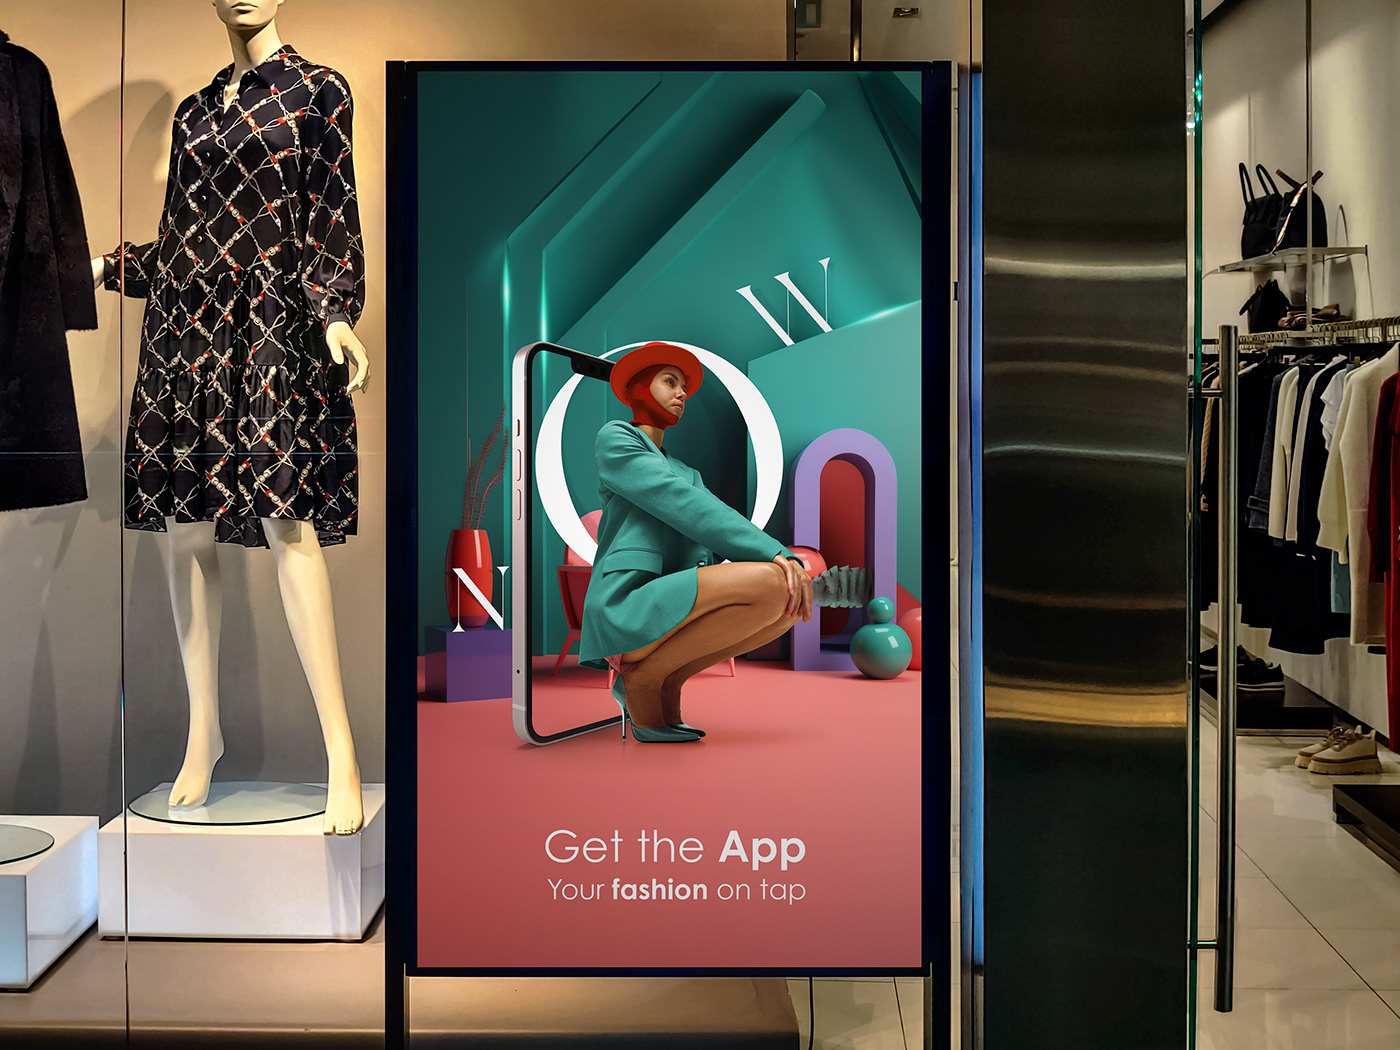 Fashion  Mobile app clothes campaign Memphis colorful Advertising  Social media post Socialmedia